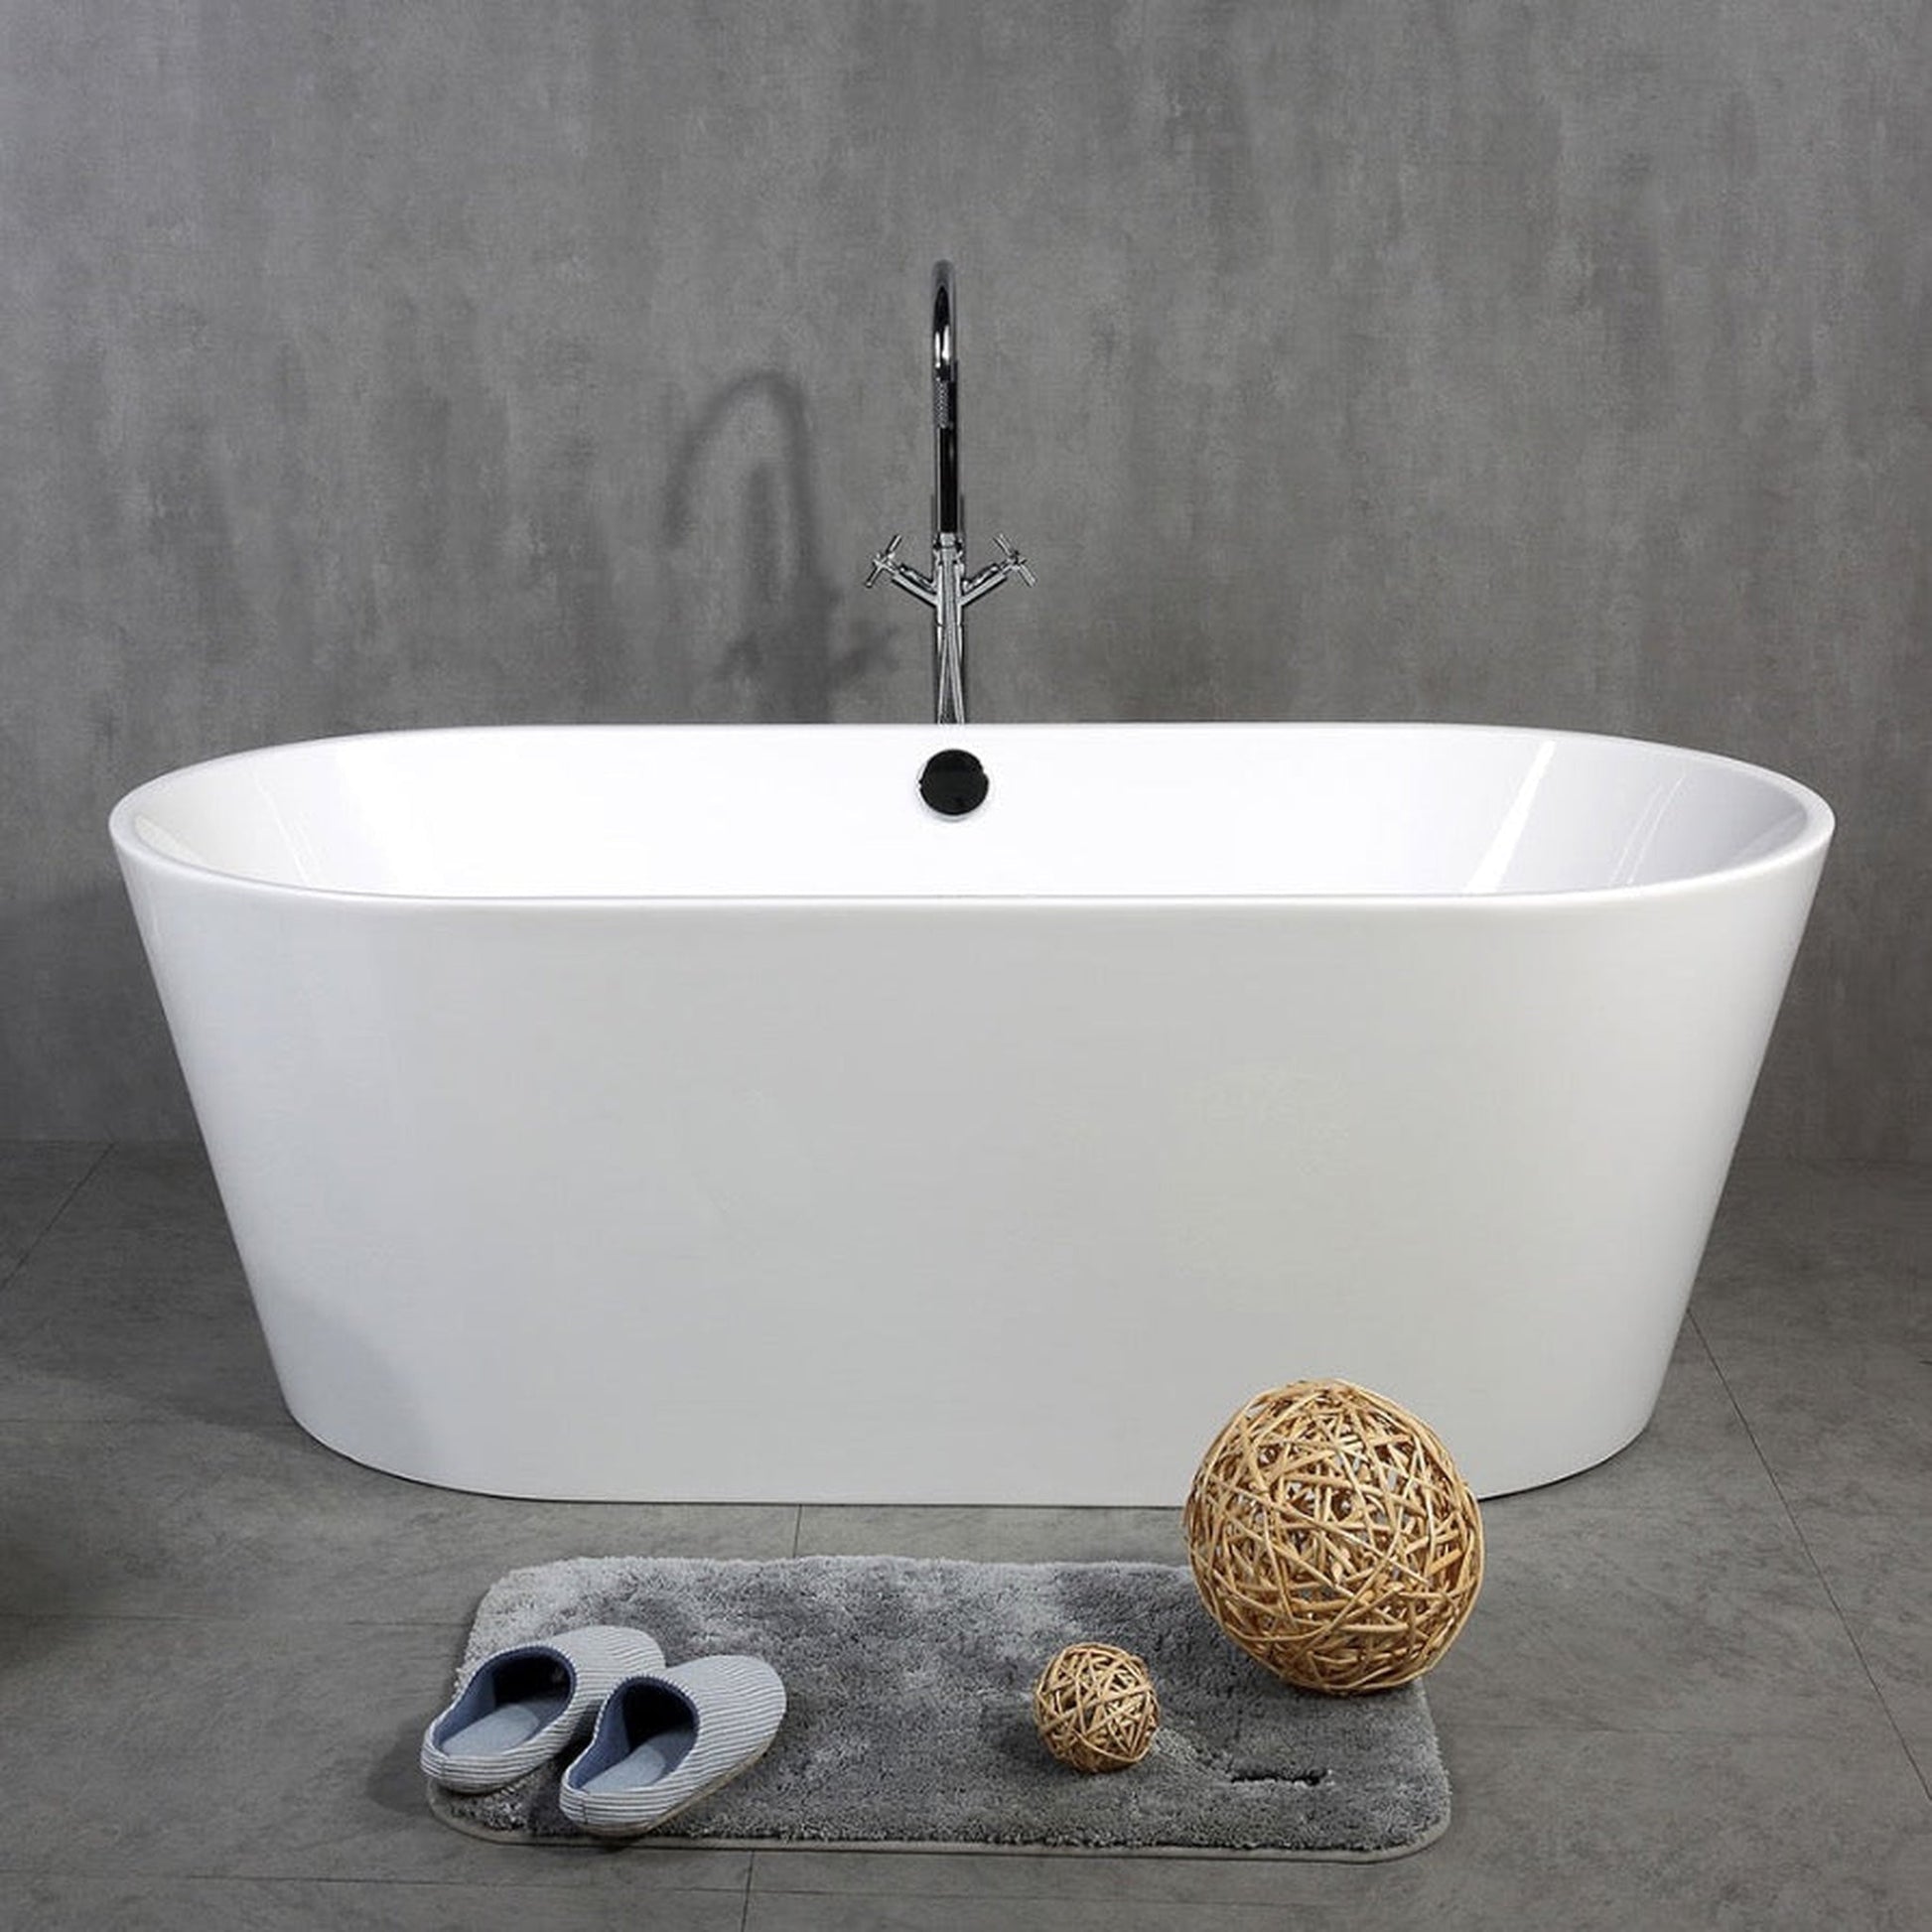 TONA Skysea 59" Glossy White Acrylic Freestanding Oval Bathtub With Chrome-Plated Drain Cover & Overflow Cover